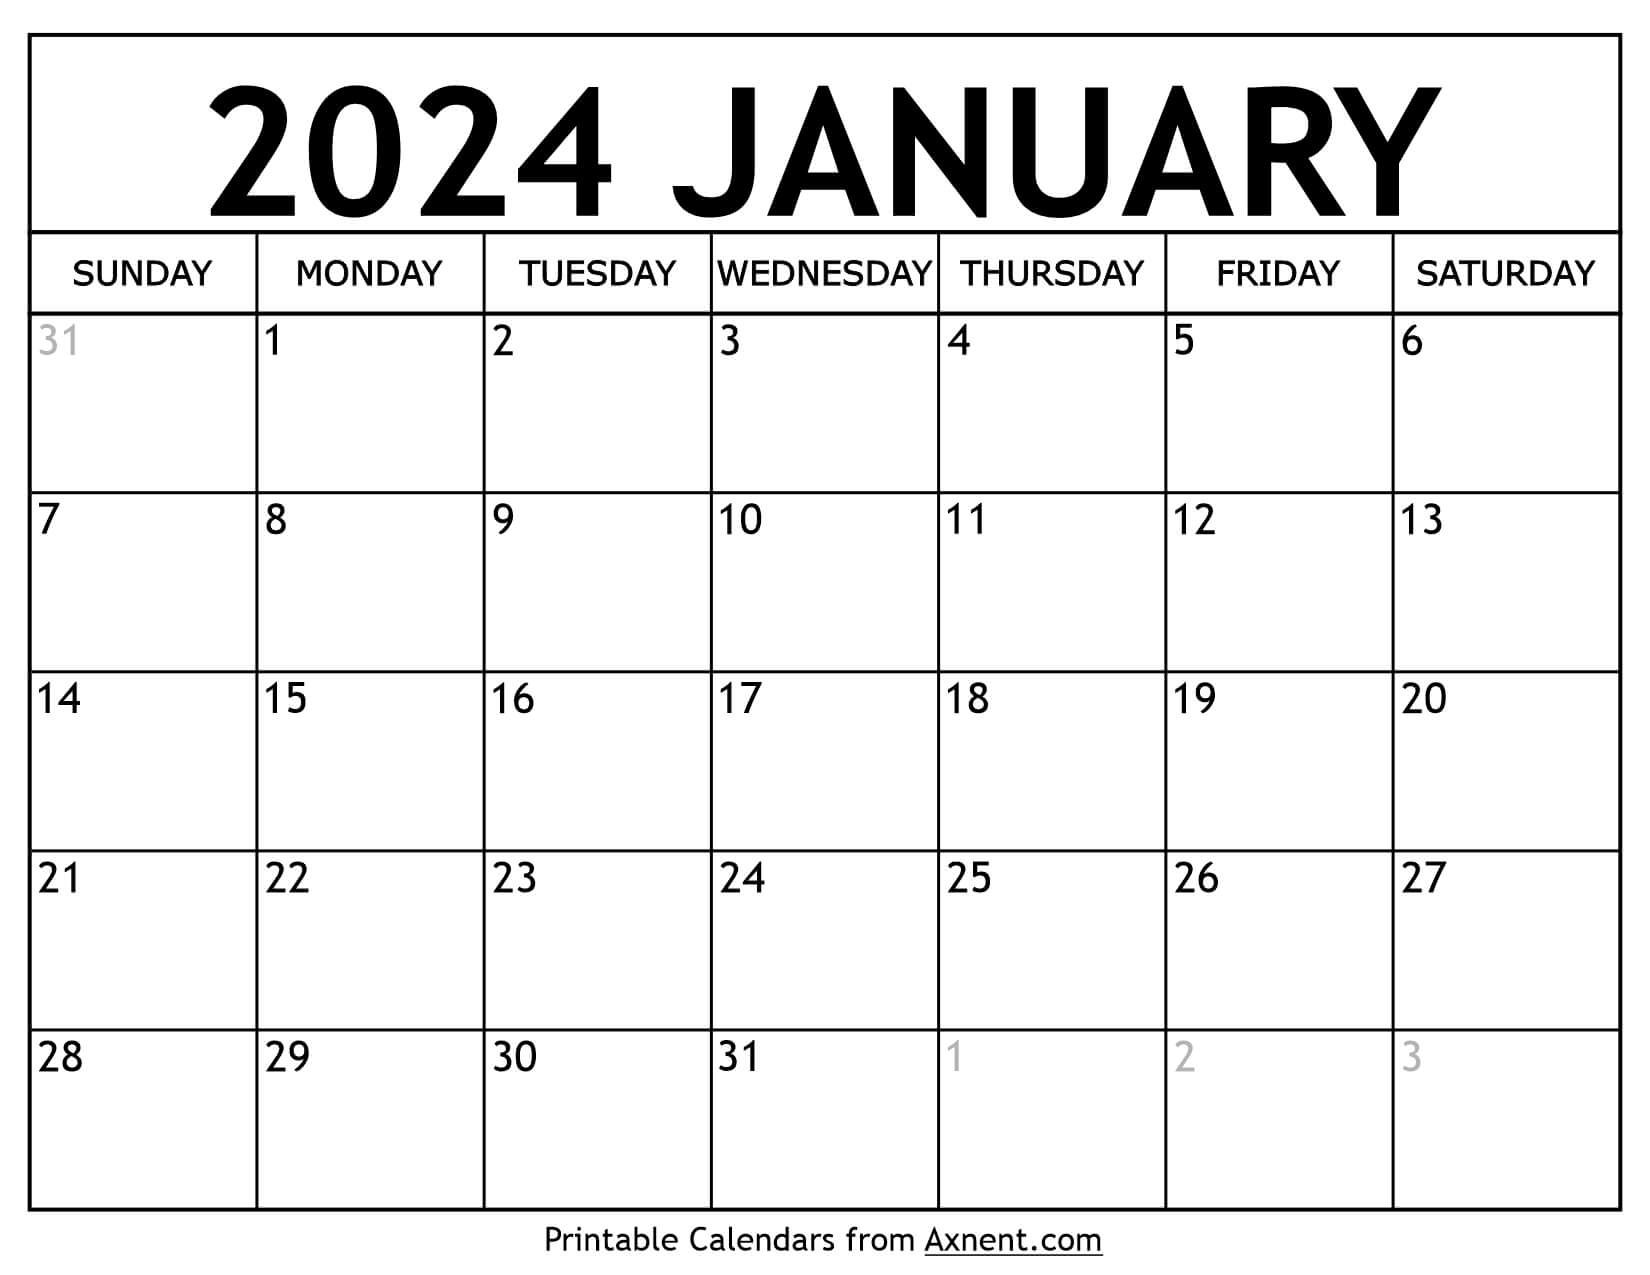 Printable January 2024 Calendar Template - Print Now for 2024 Calendar Printable January